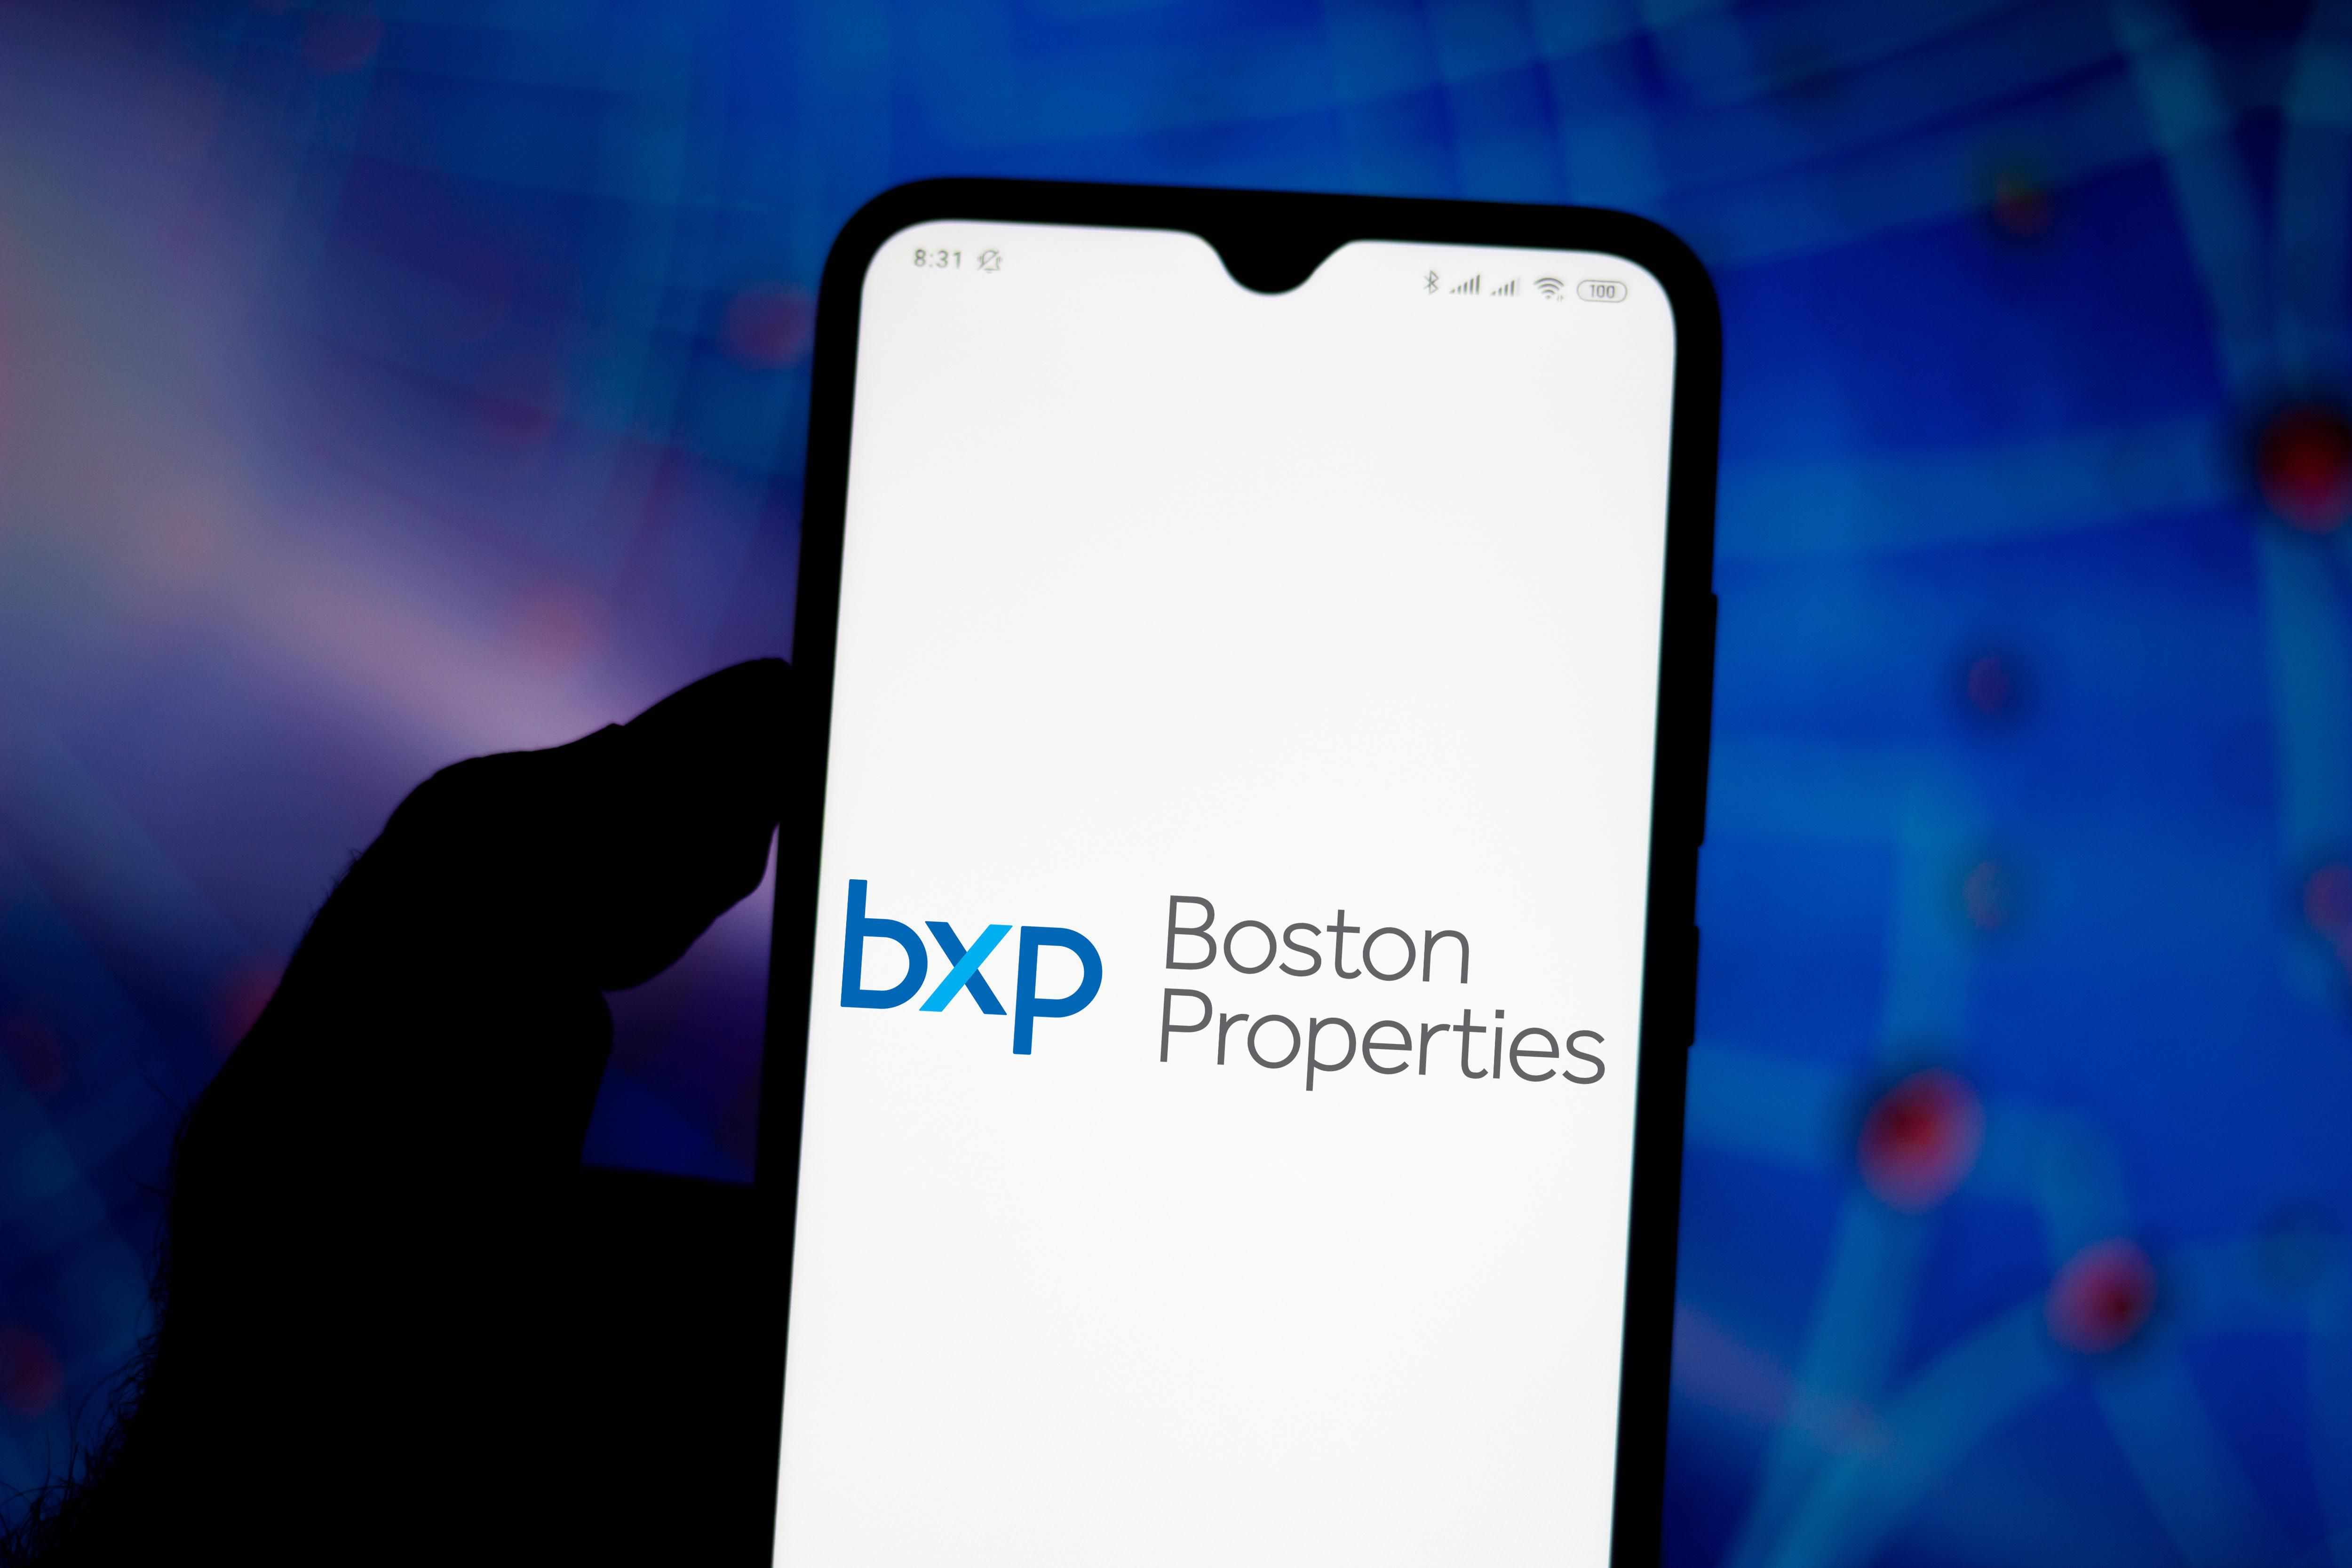 stock properties boston gains bxp